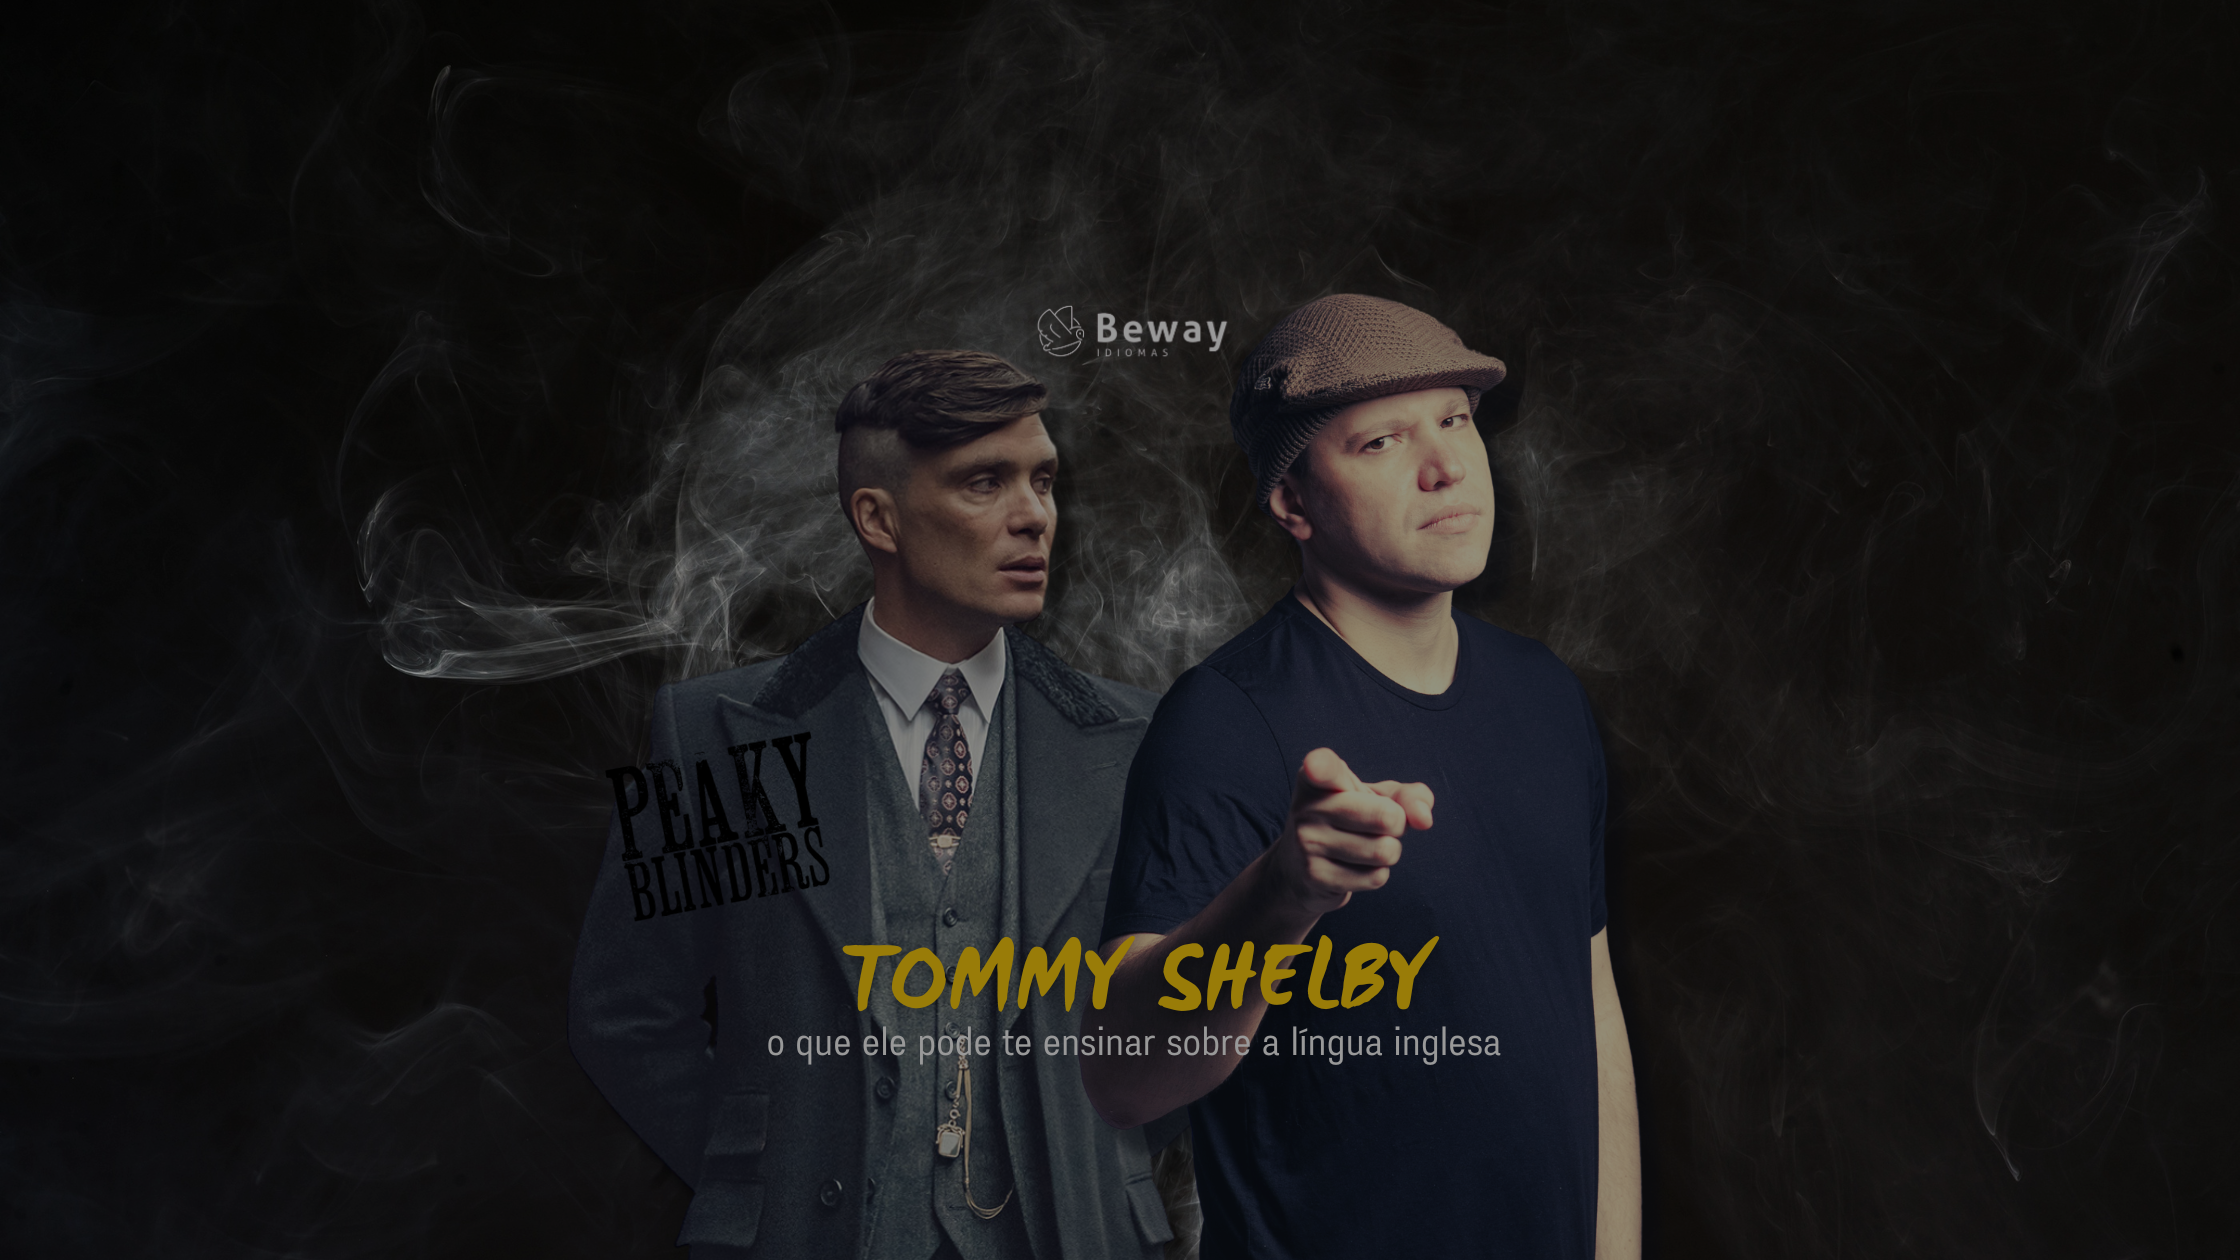 Aprenda com Tommy Shelby, de Peaky Blinders - Blog do Jonas Bressan